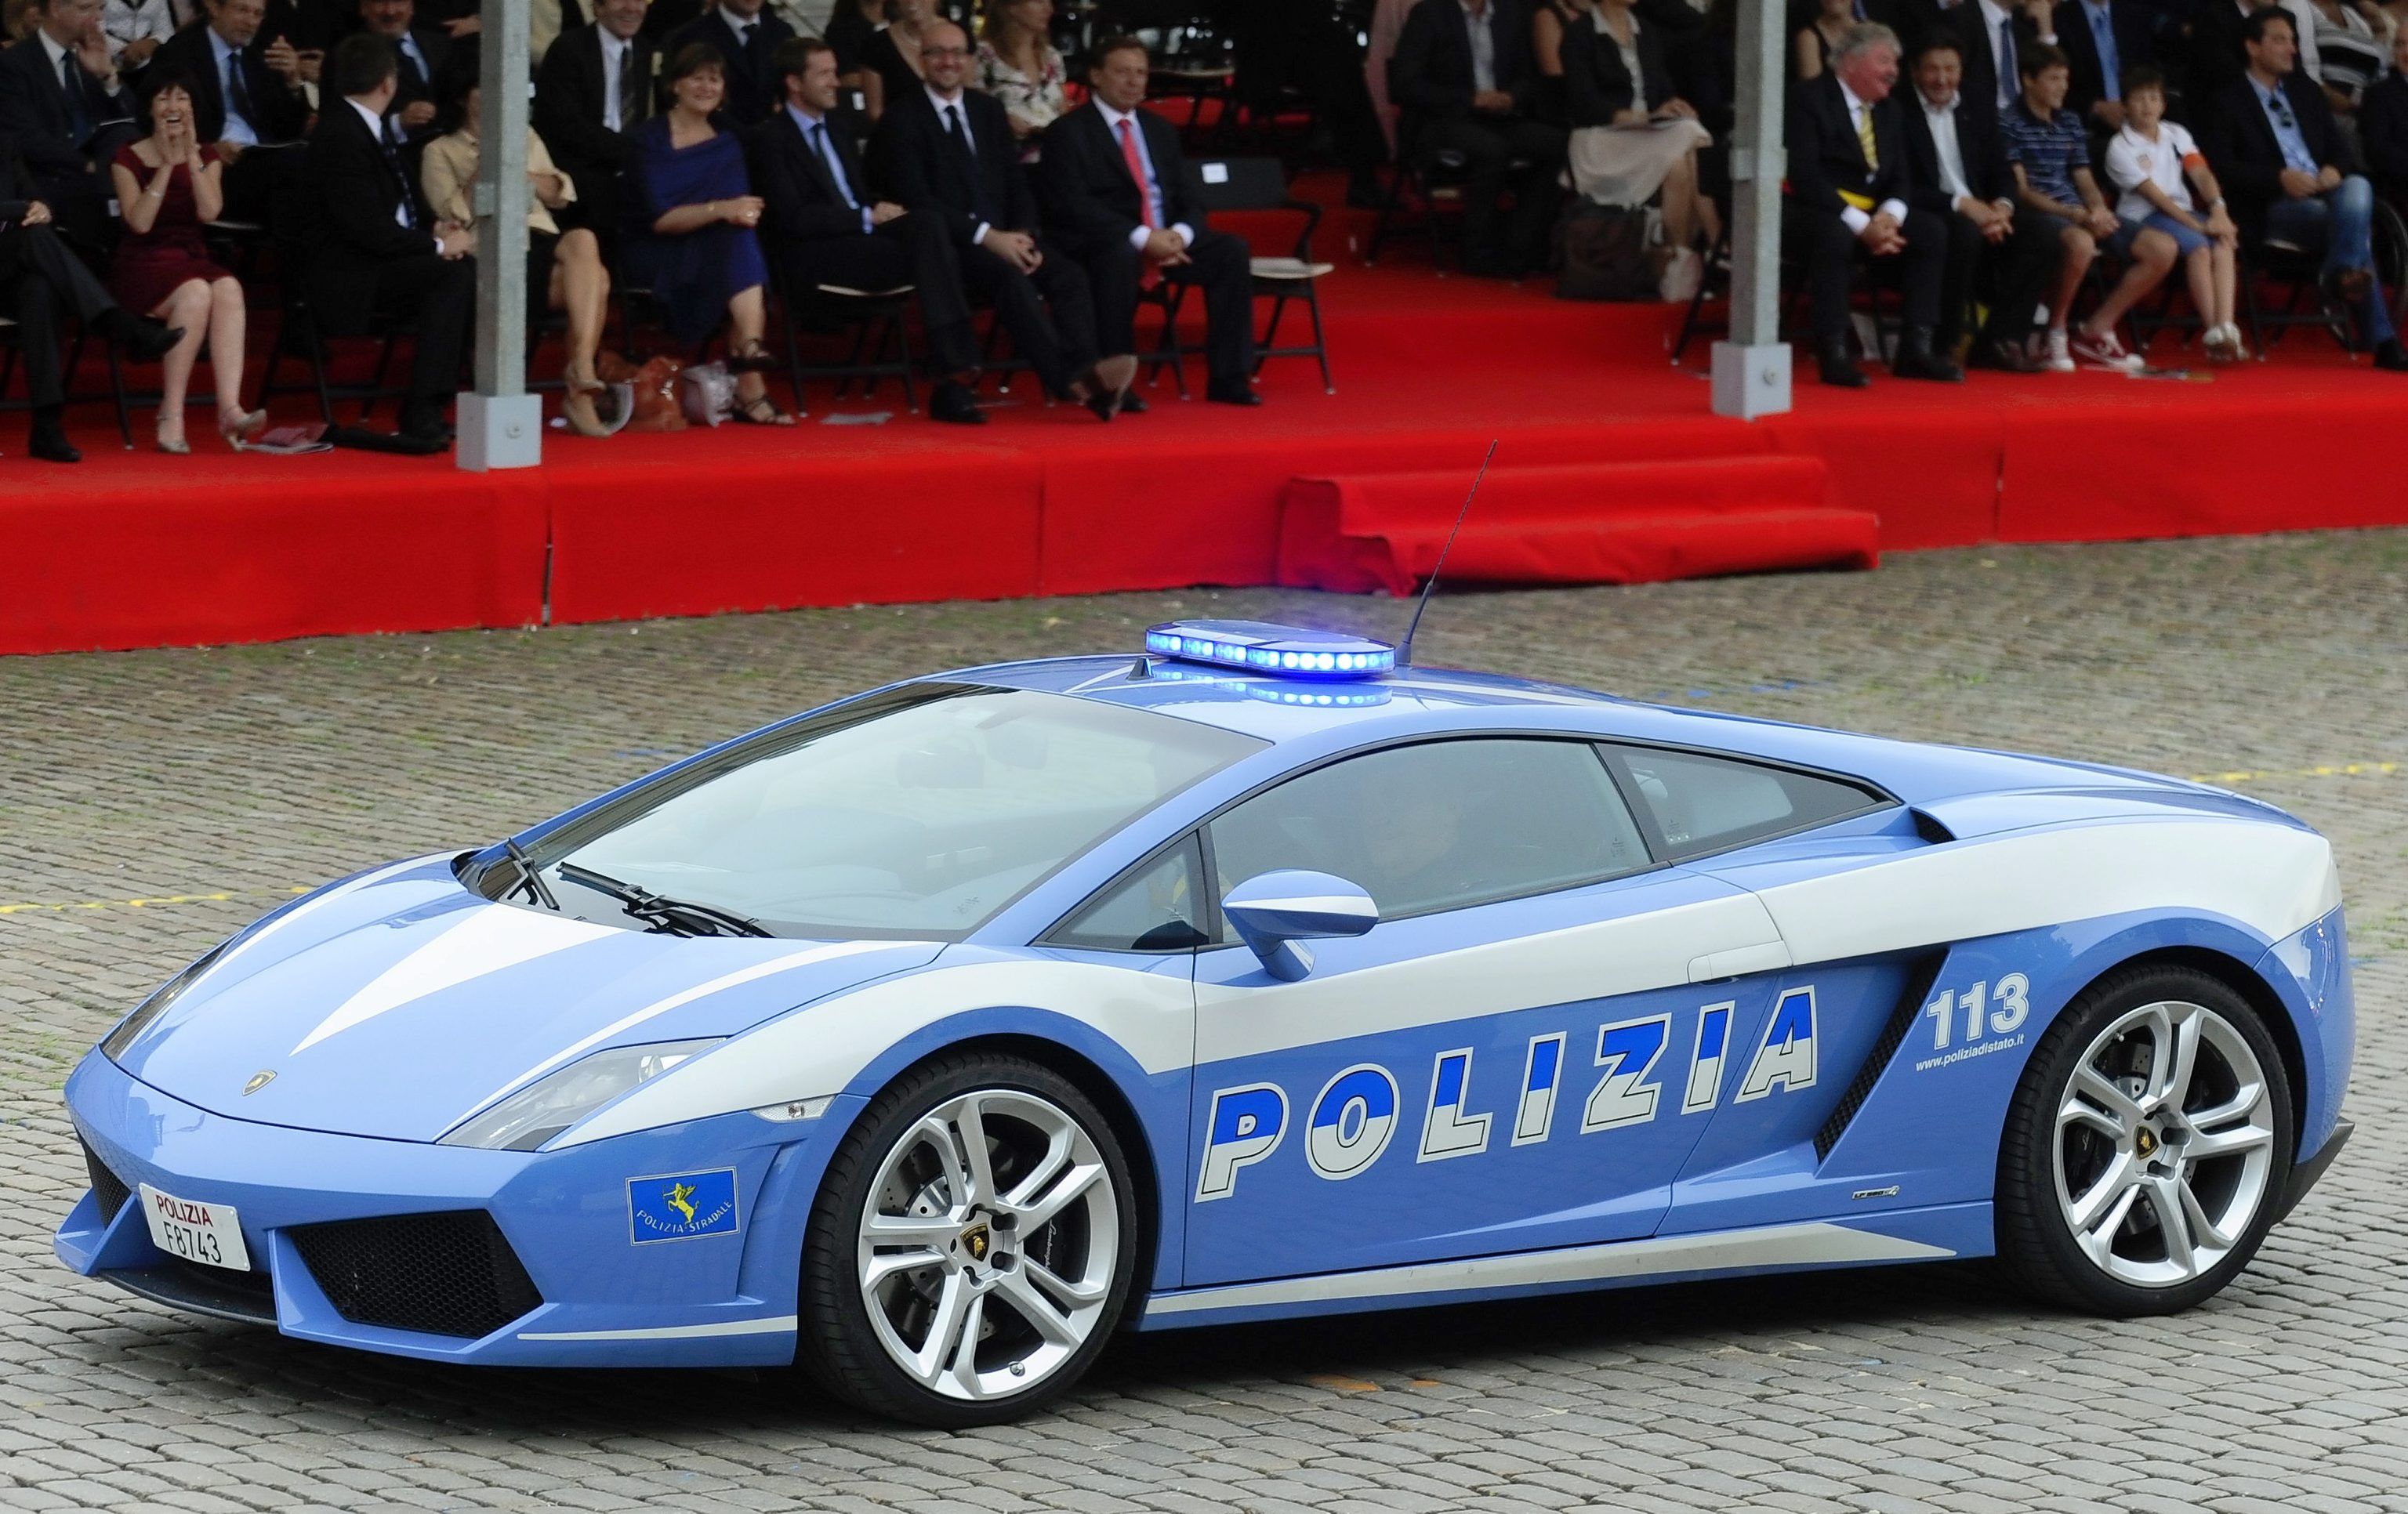 super fast police cars